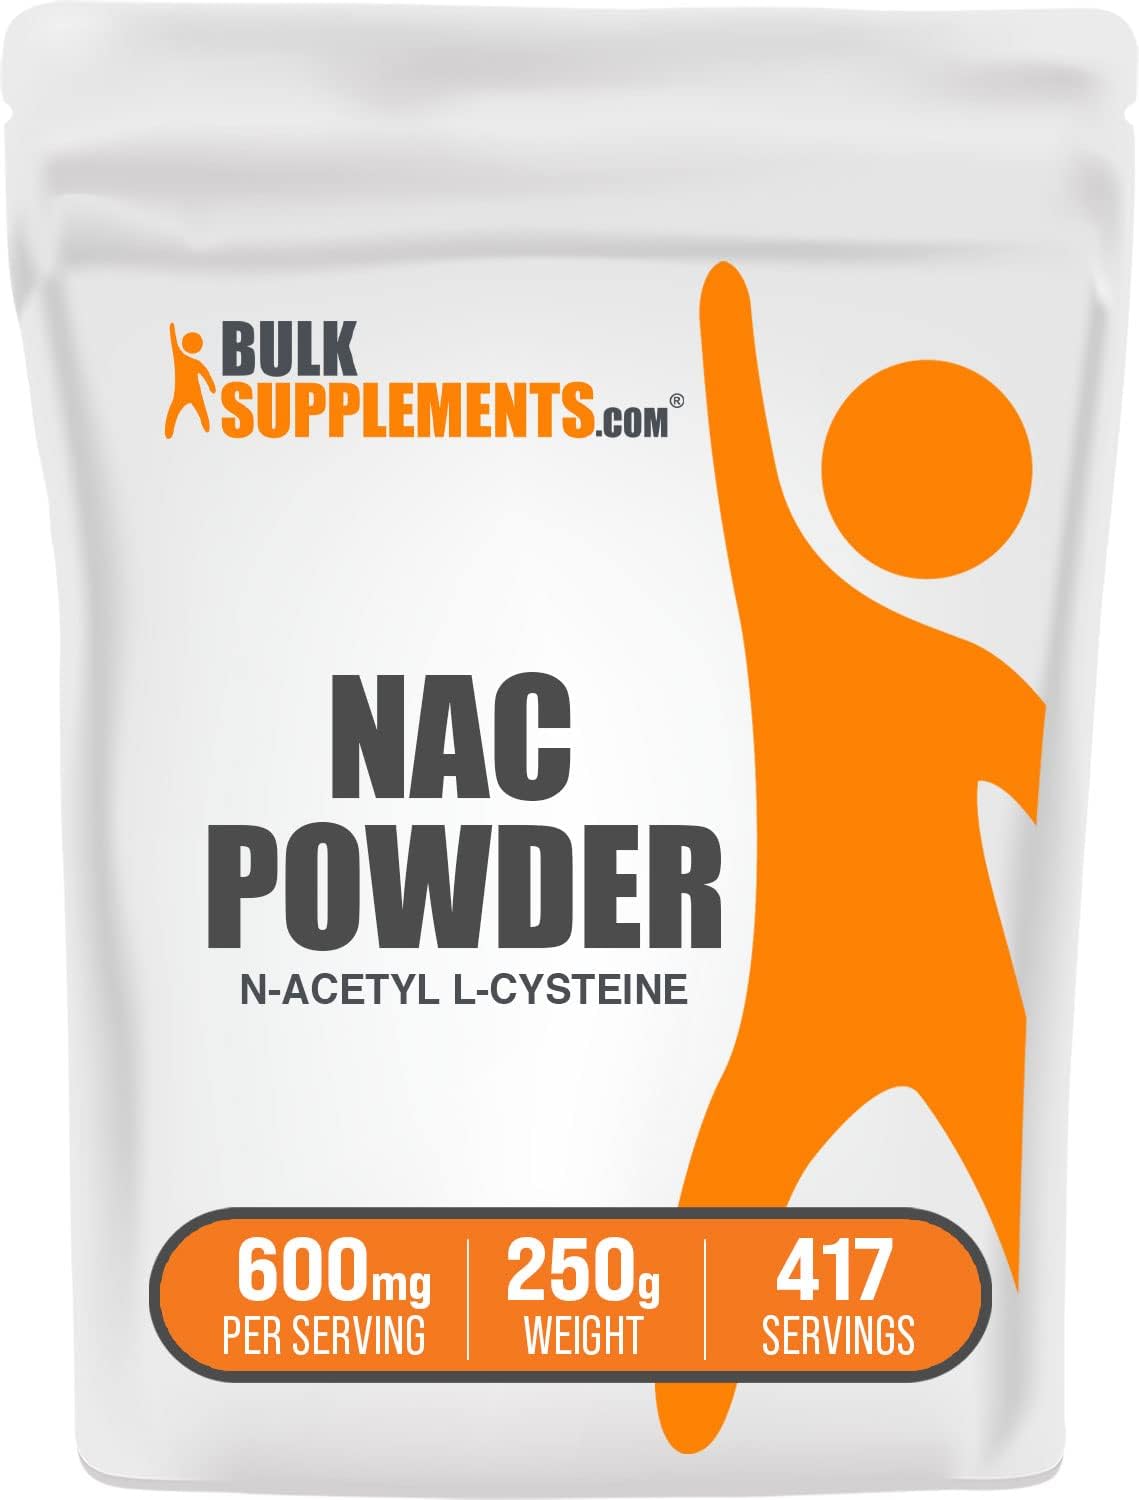 BULKSUPPLEMENTS.COM NAC Powder - N-Acetyl Cysteine 600mg, NAC Supplement - Antioxidant Support, Gluten Free - 600mg per Serving, 417 Servings, 250g (8.8 oz) (Pack of 1)